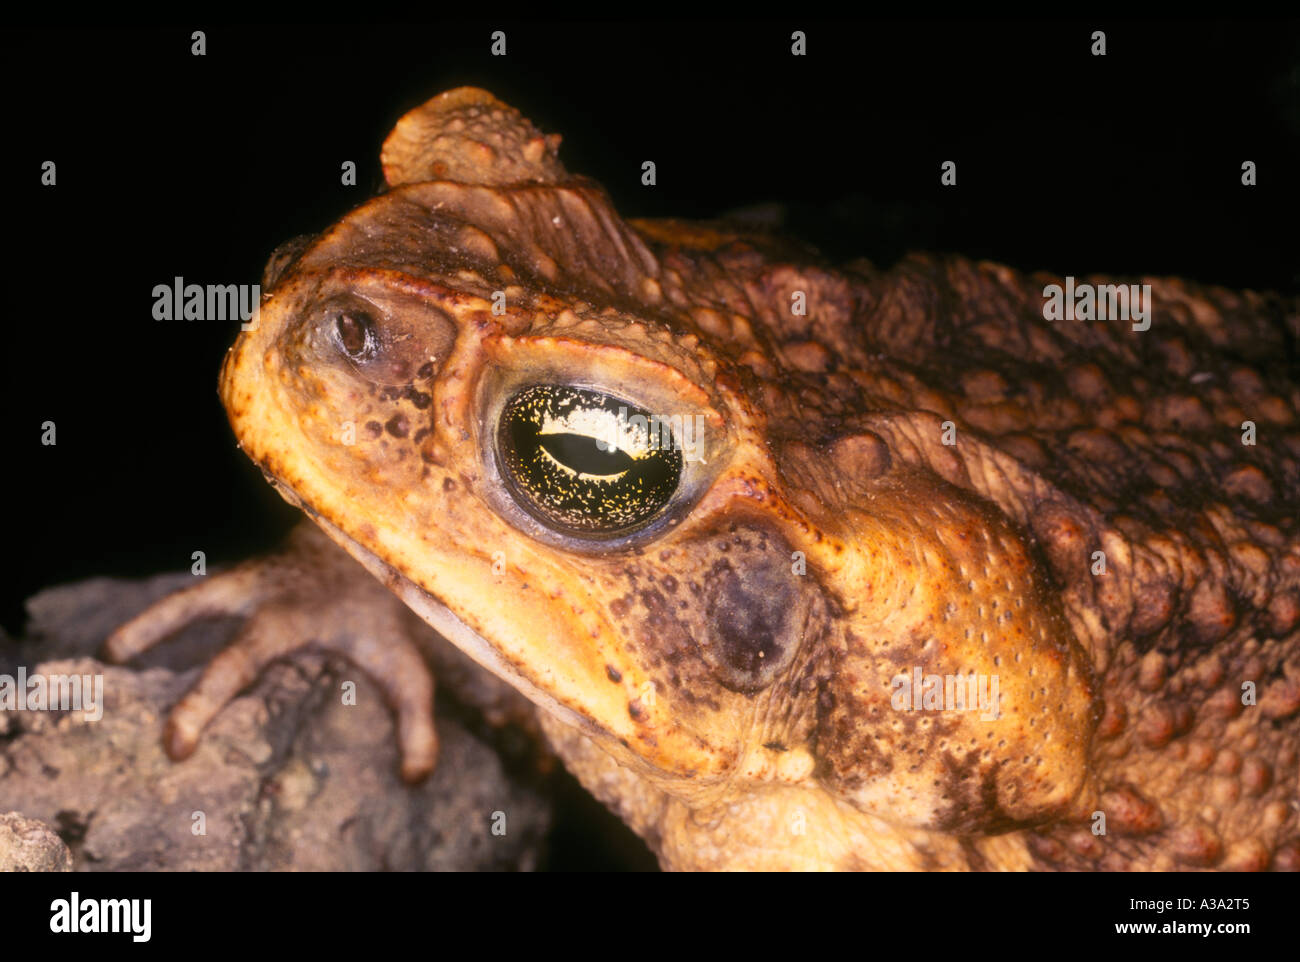 Cane Toad portrait Stock Photo